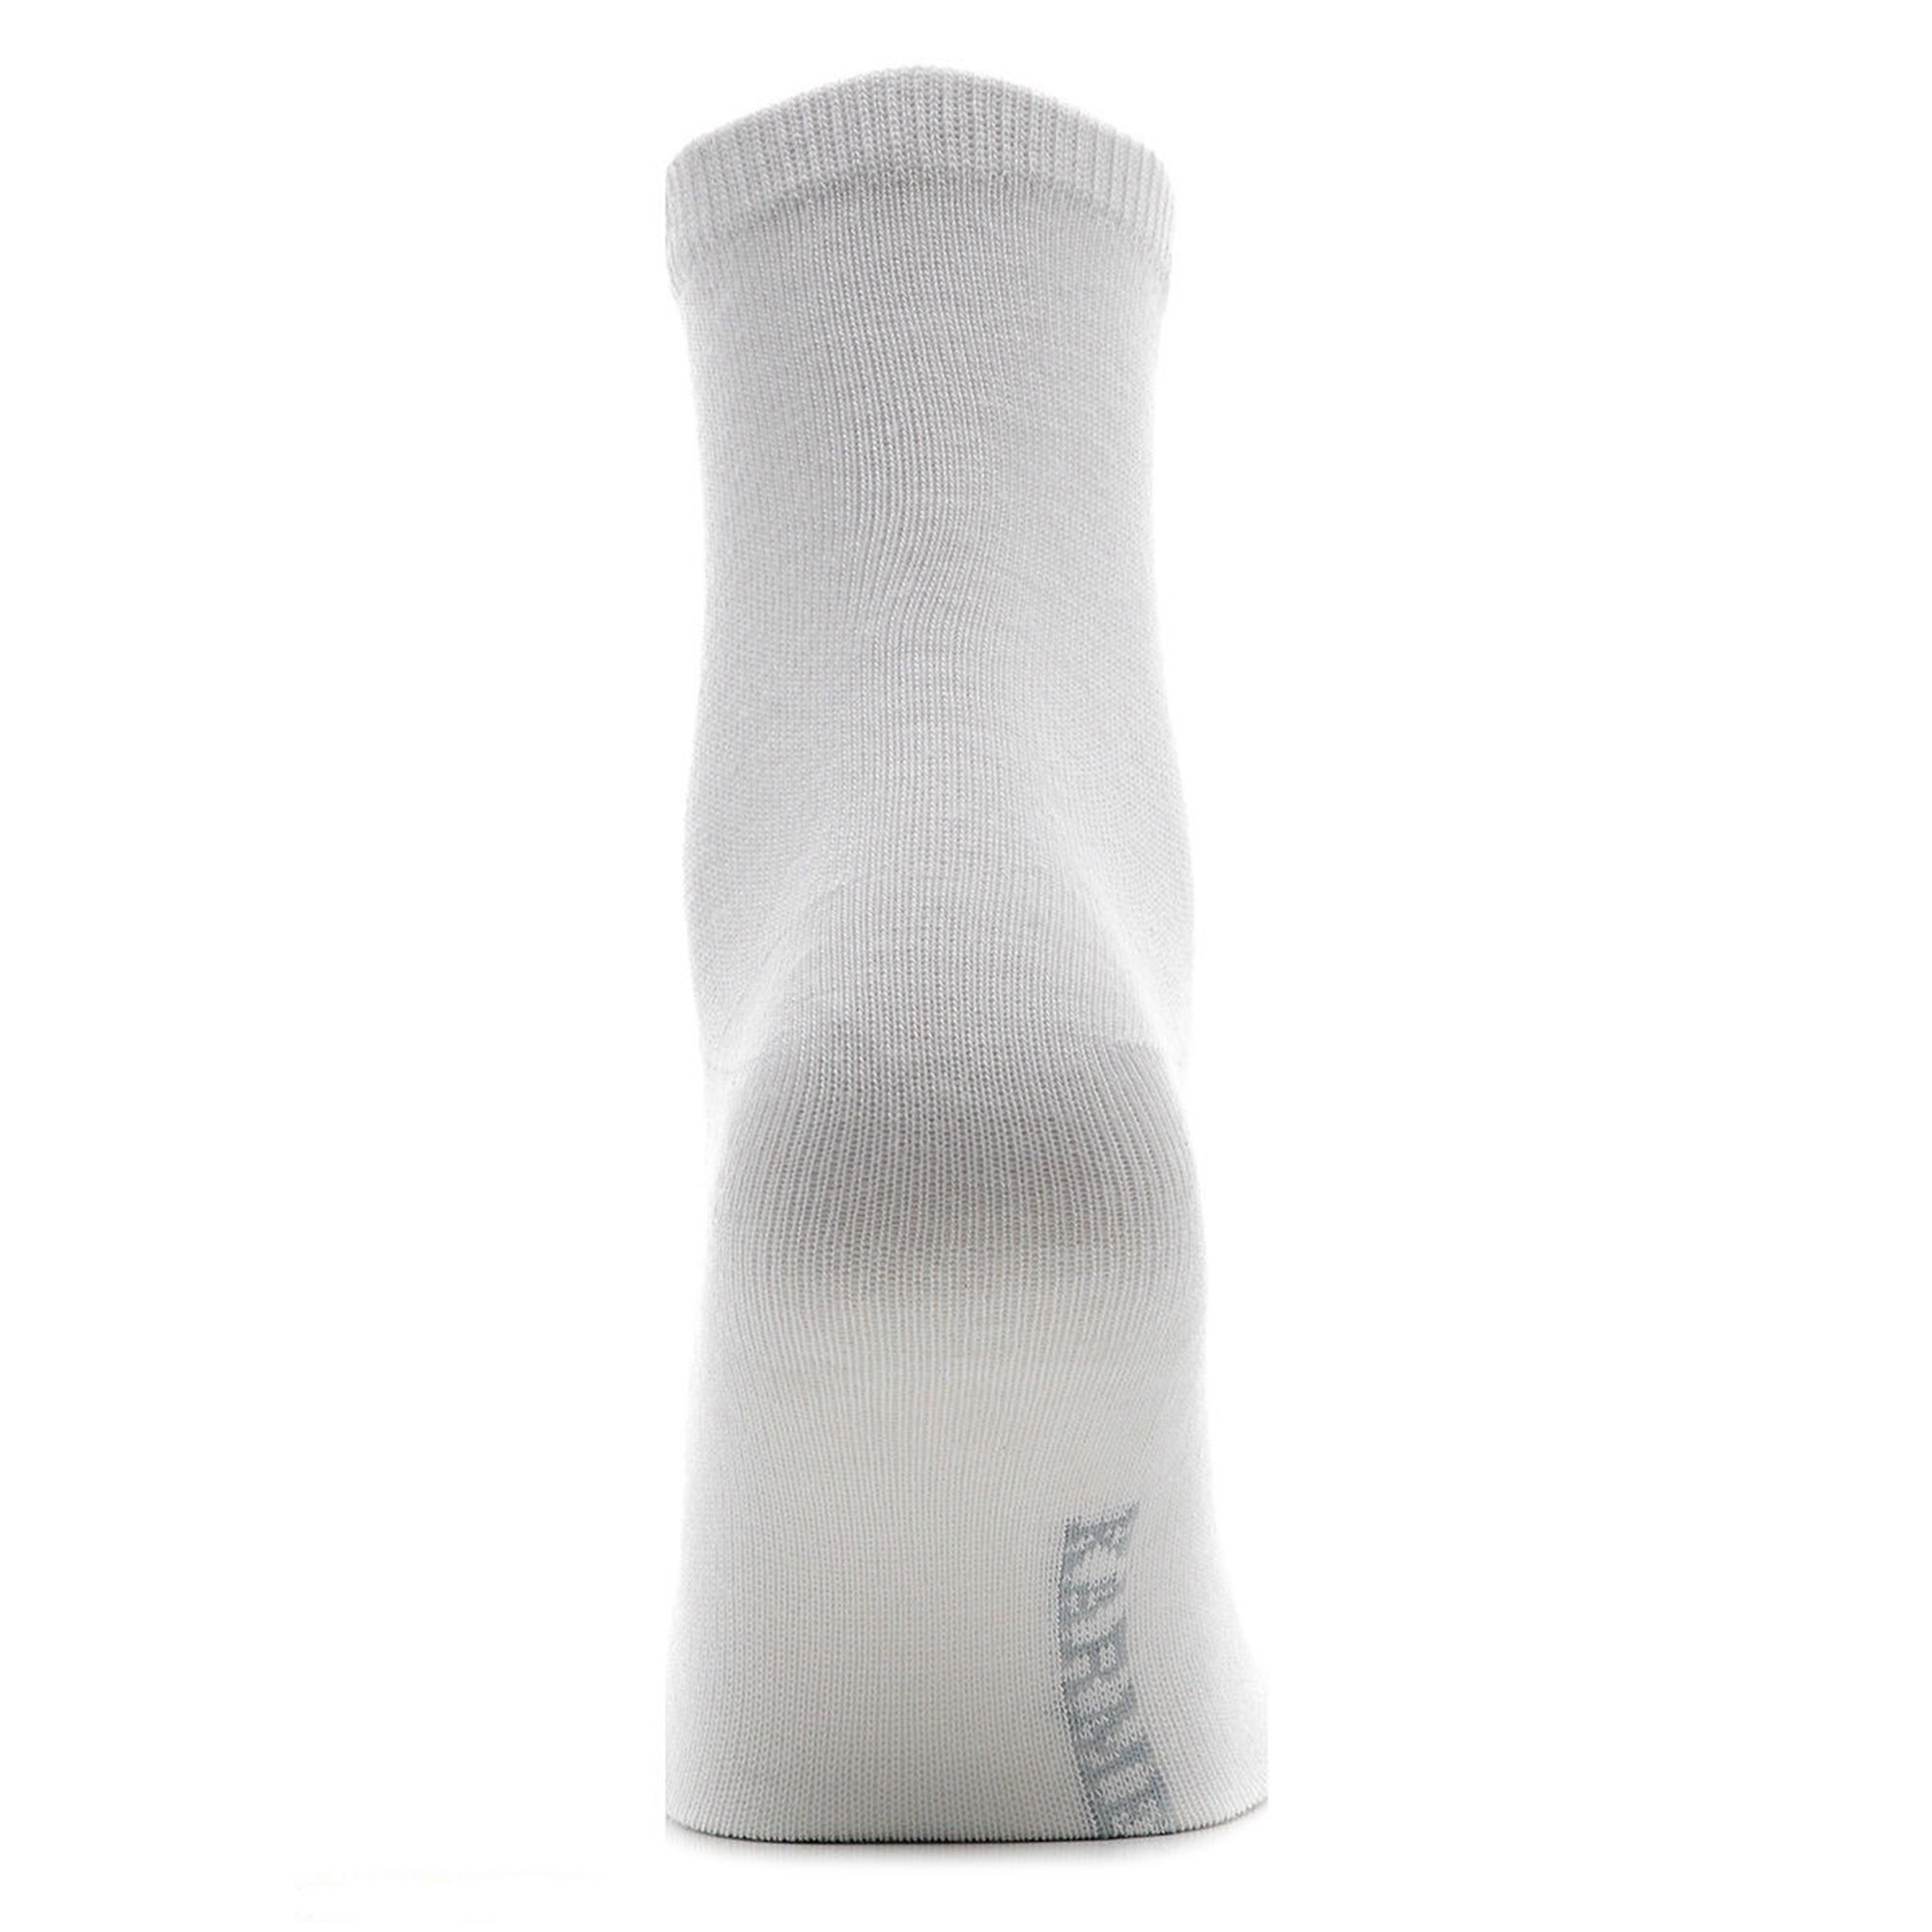 Носки Karmen Calza Look bianco S 35-37, цвет белый, размер 35-37 - фото 2